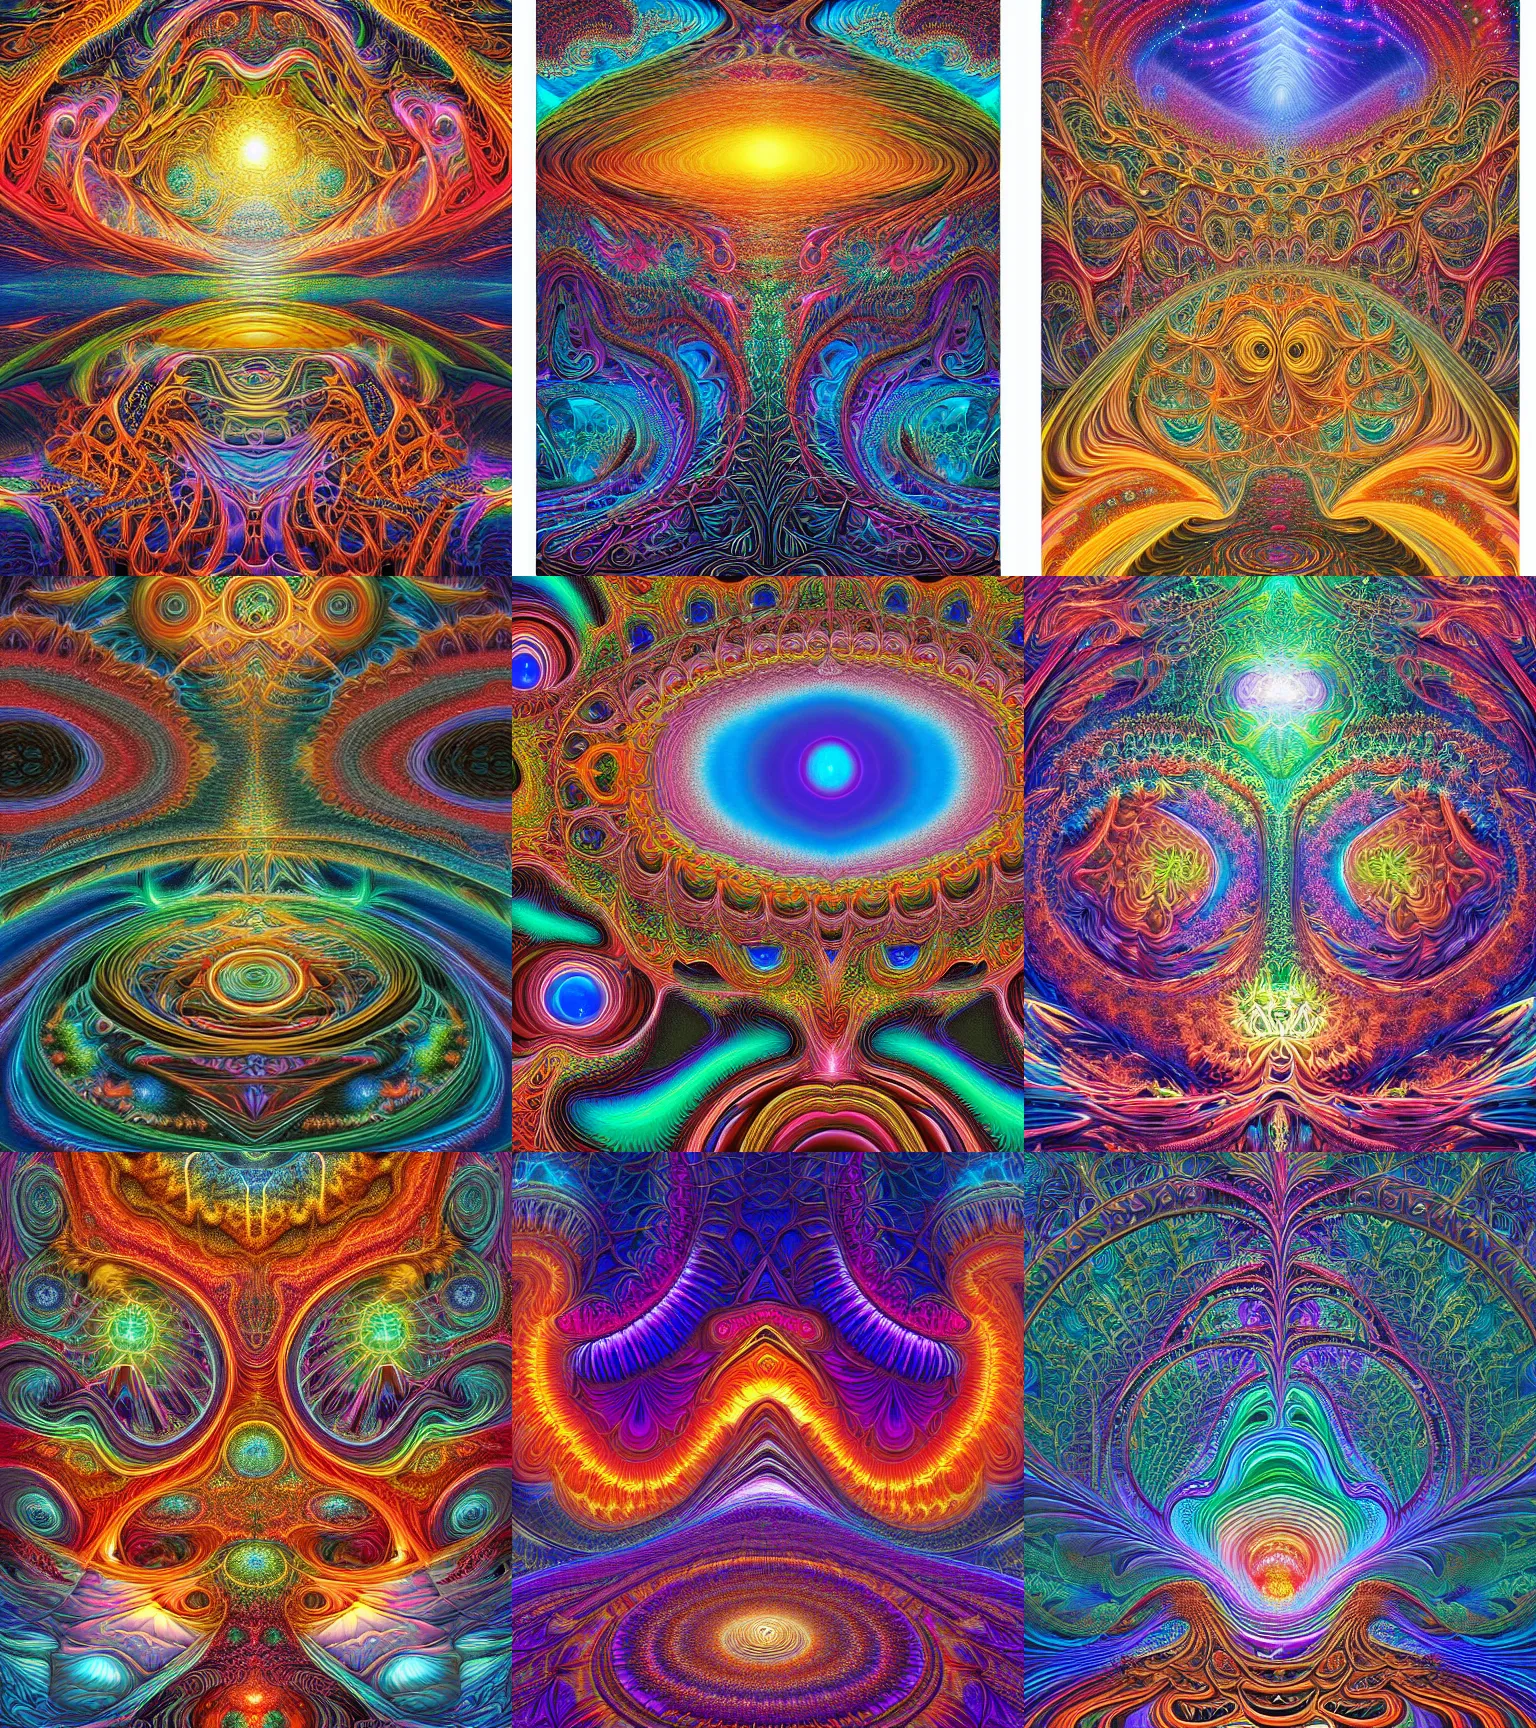 Prompt: a beautiful digital art of a intricate ornate cosmic fractal landscape by dan mumford and alex grey, hd vibrant, hyper detailed, 3 d, ue 5, ultra fine detailed